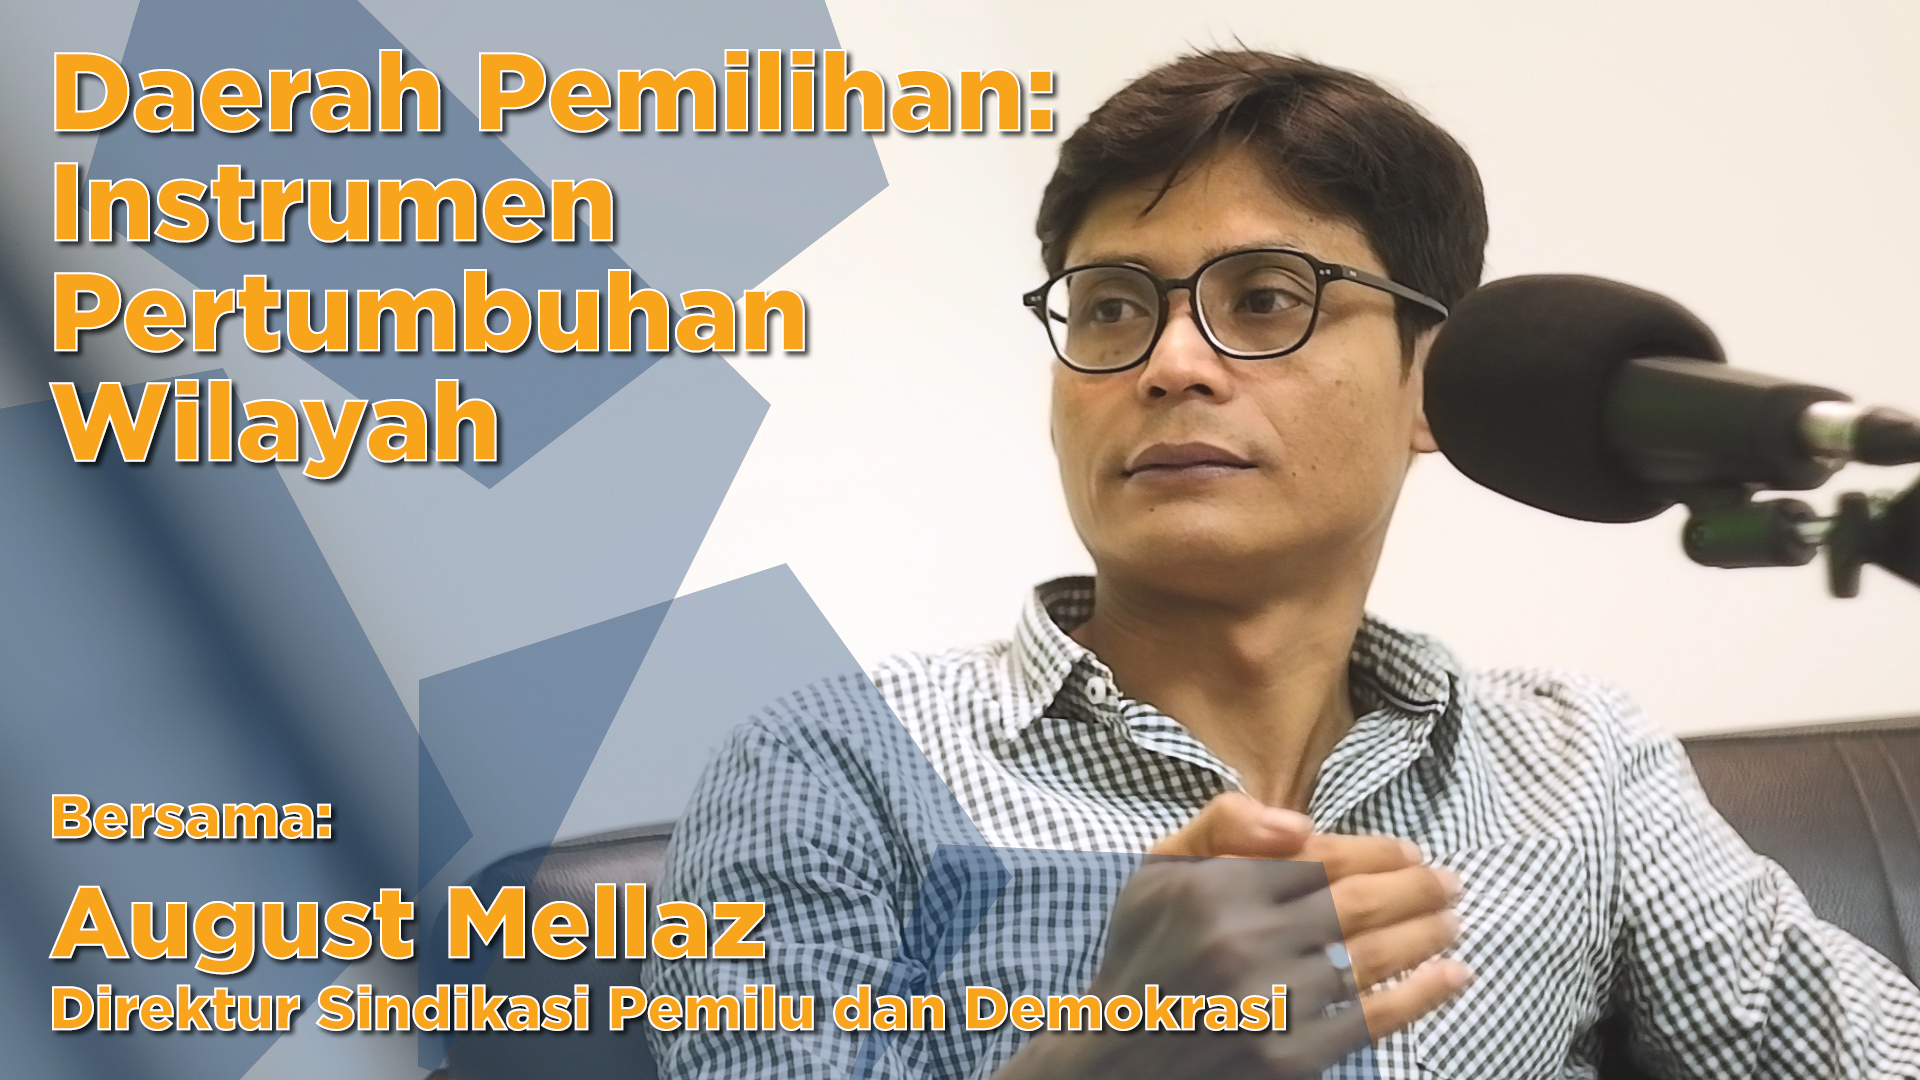 Direktur Sindikasi Pemilu dan Demokrasi (SPD) August Mellaz